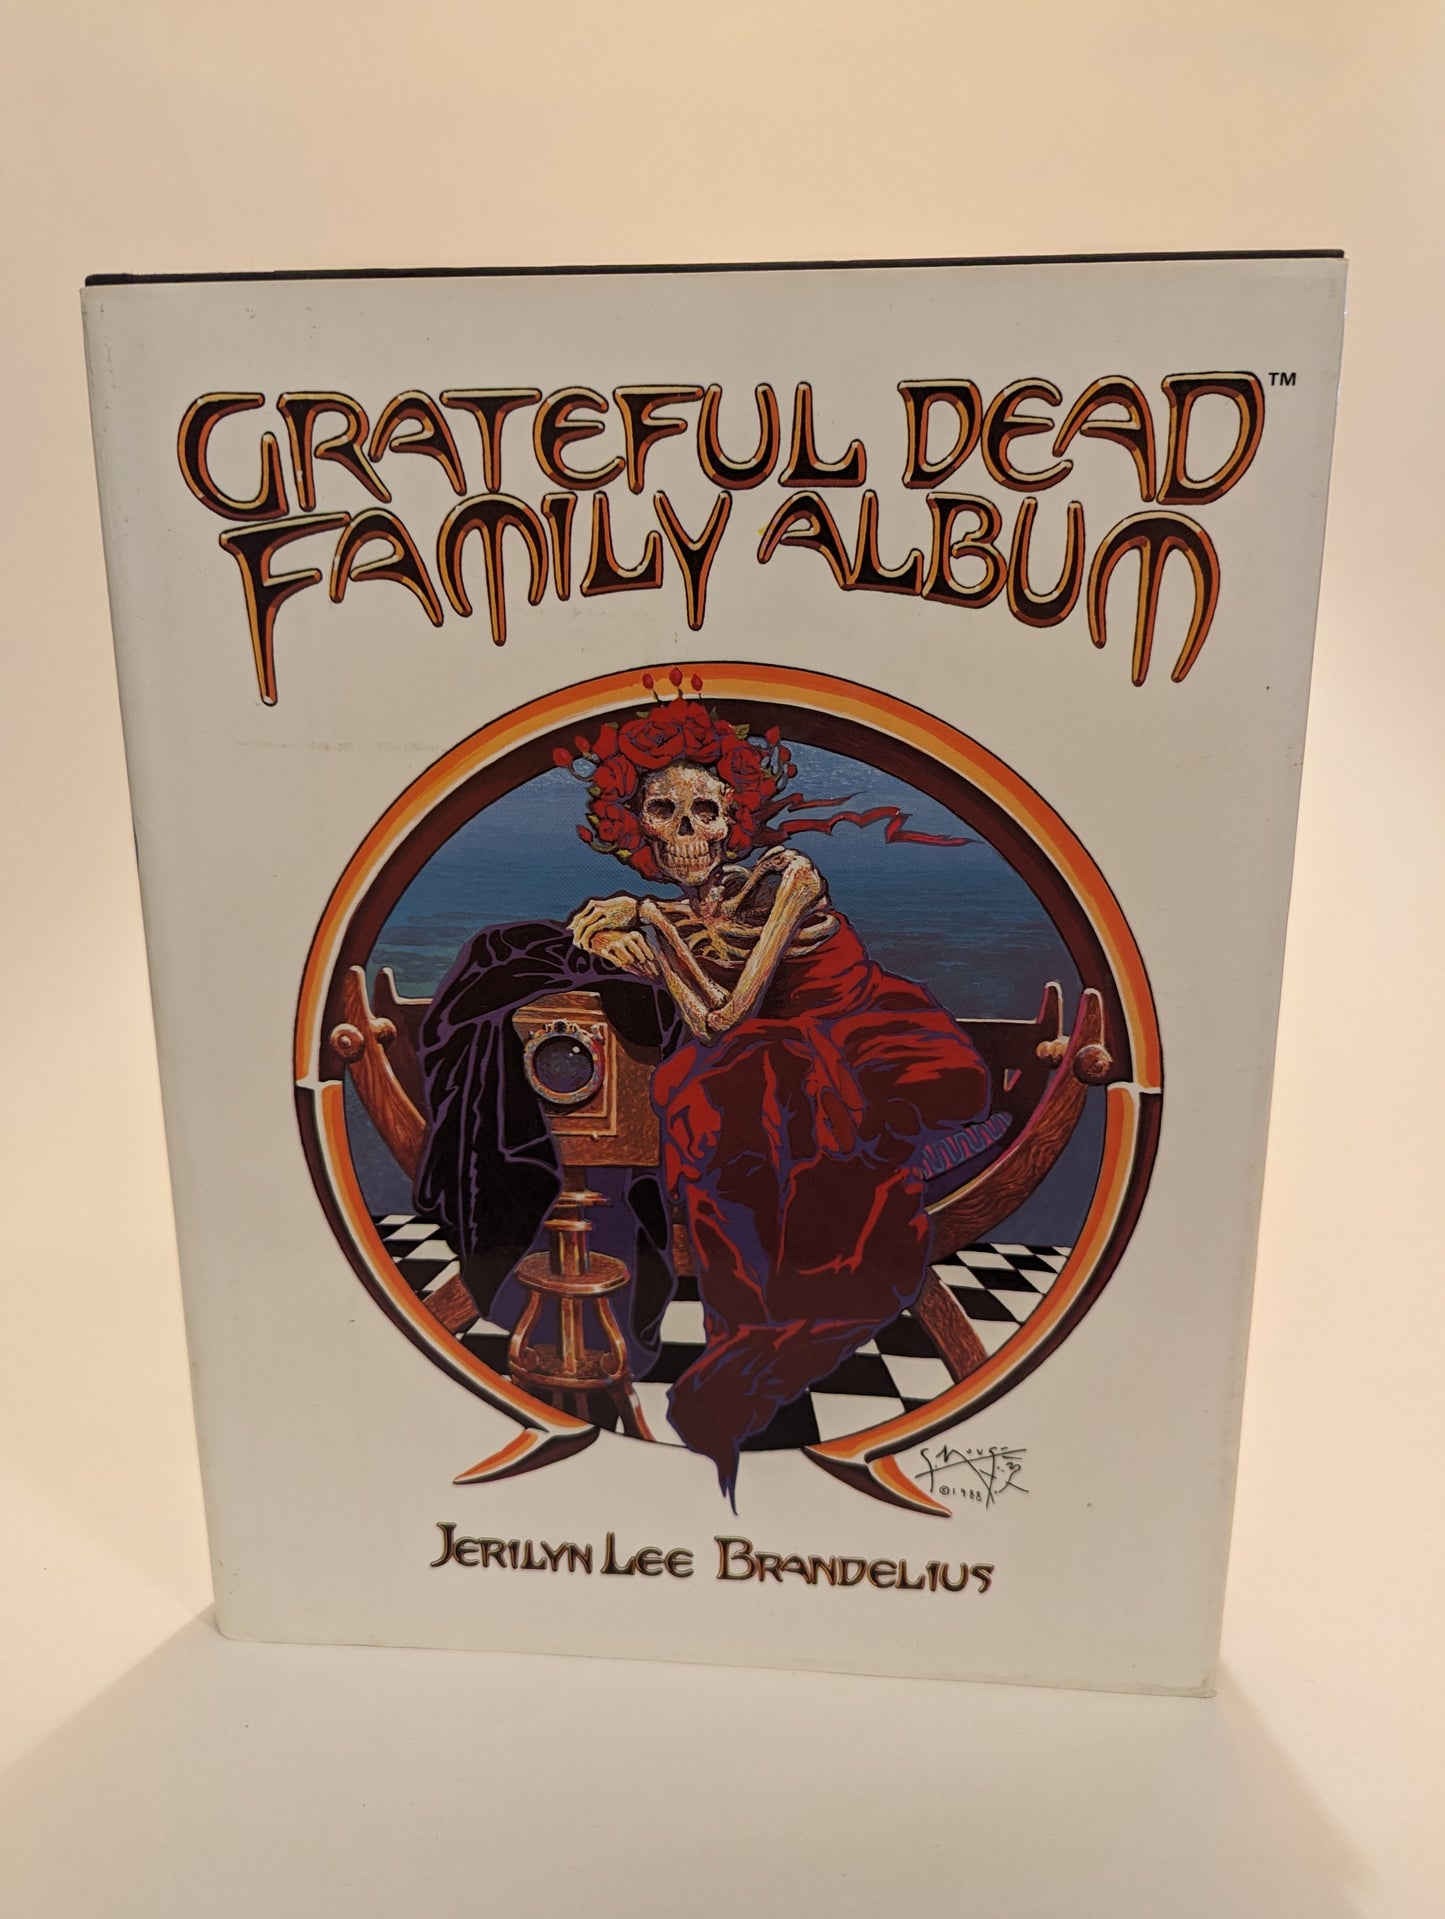 The Grateful Dead Family Album [Jerilyn Lee Brandelius]